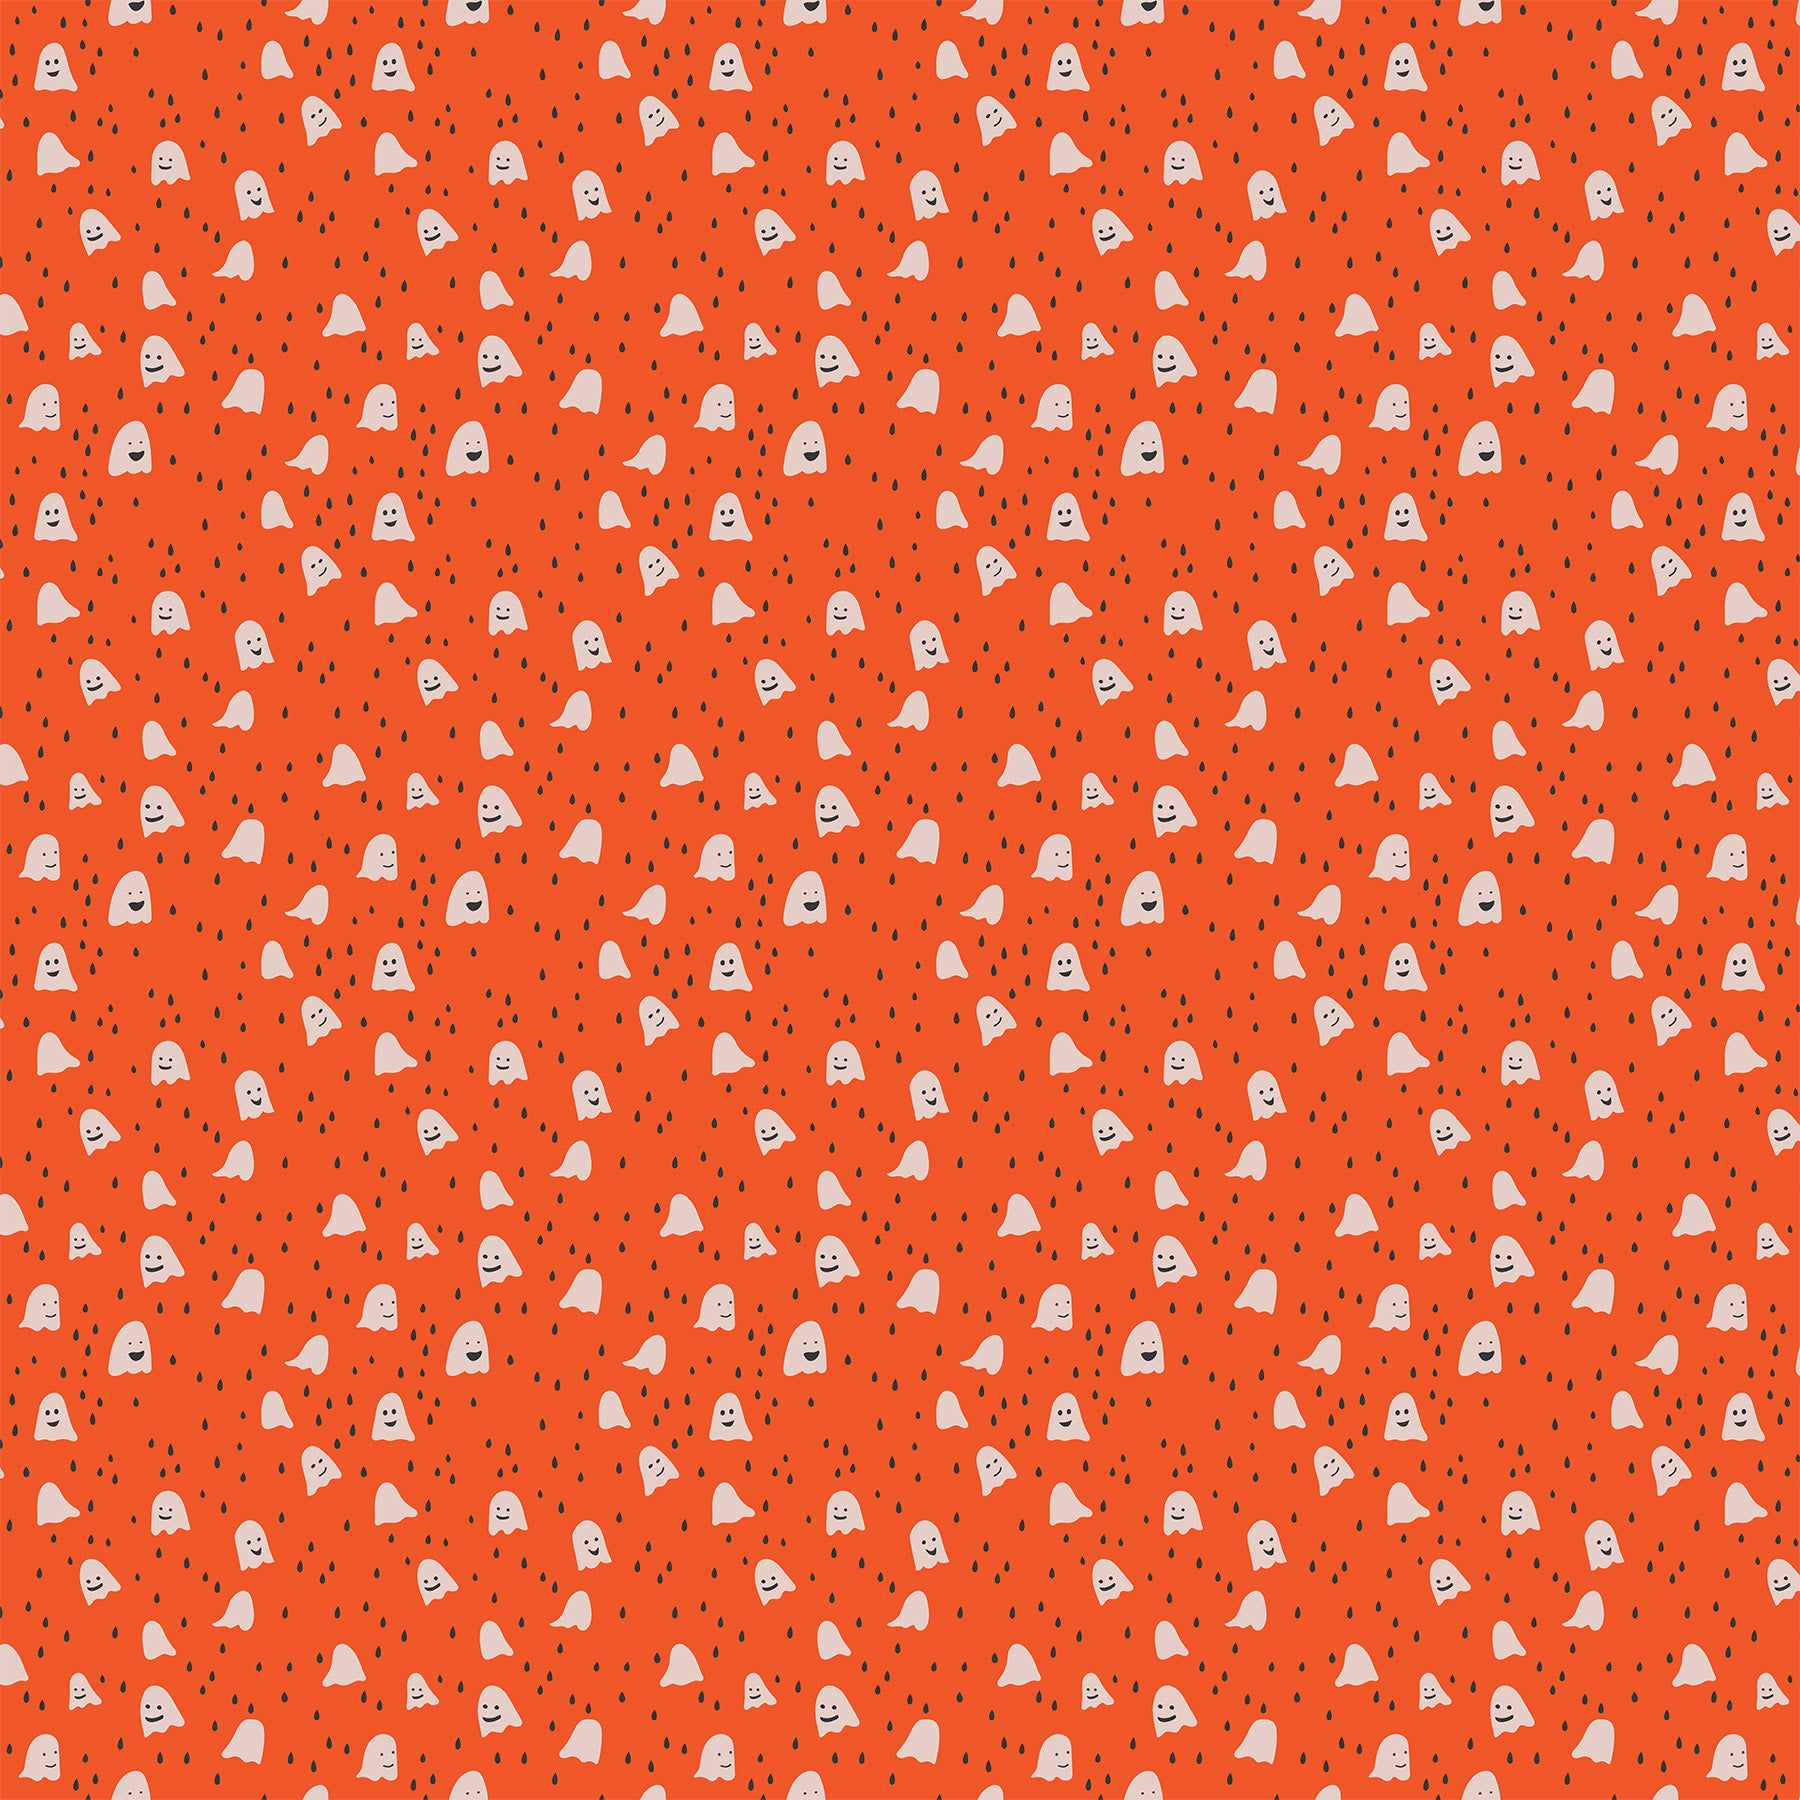 Manufacturer: Figo Fabrics Designer: Dana Willard Collection: Ghosttown Print Name: Ghosts in Orange Material: 100% Cotton Weight: Quilting  SKU: 90521-56 Width: 44 inches